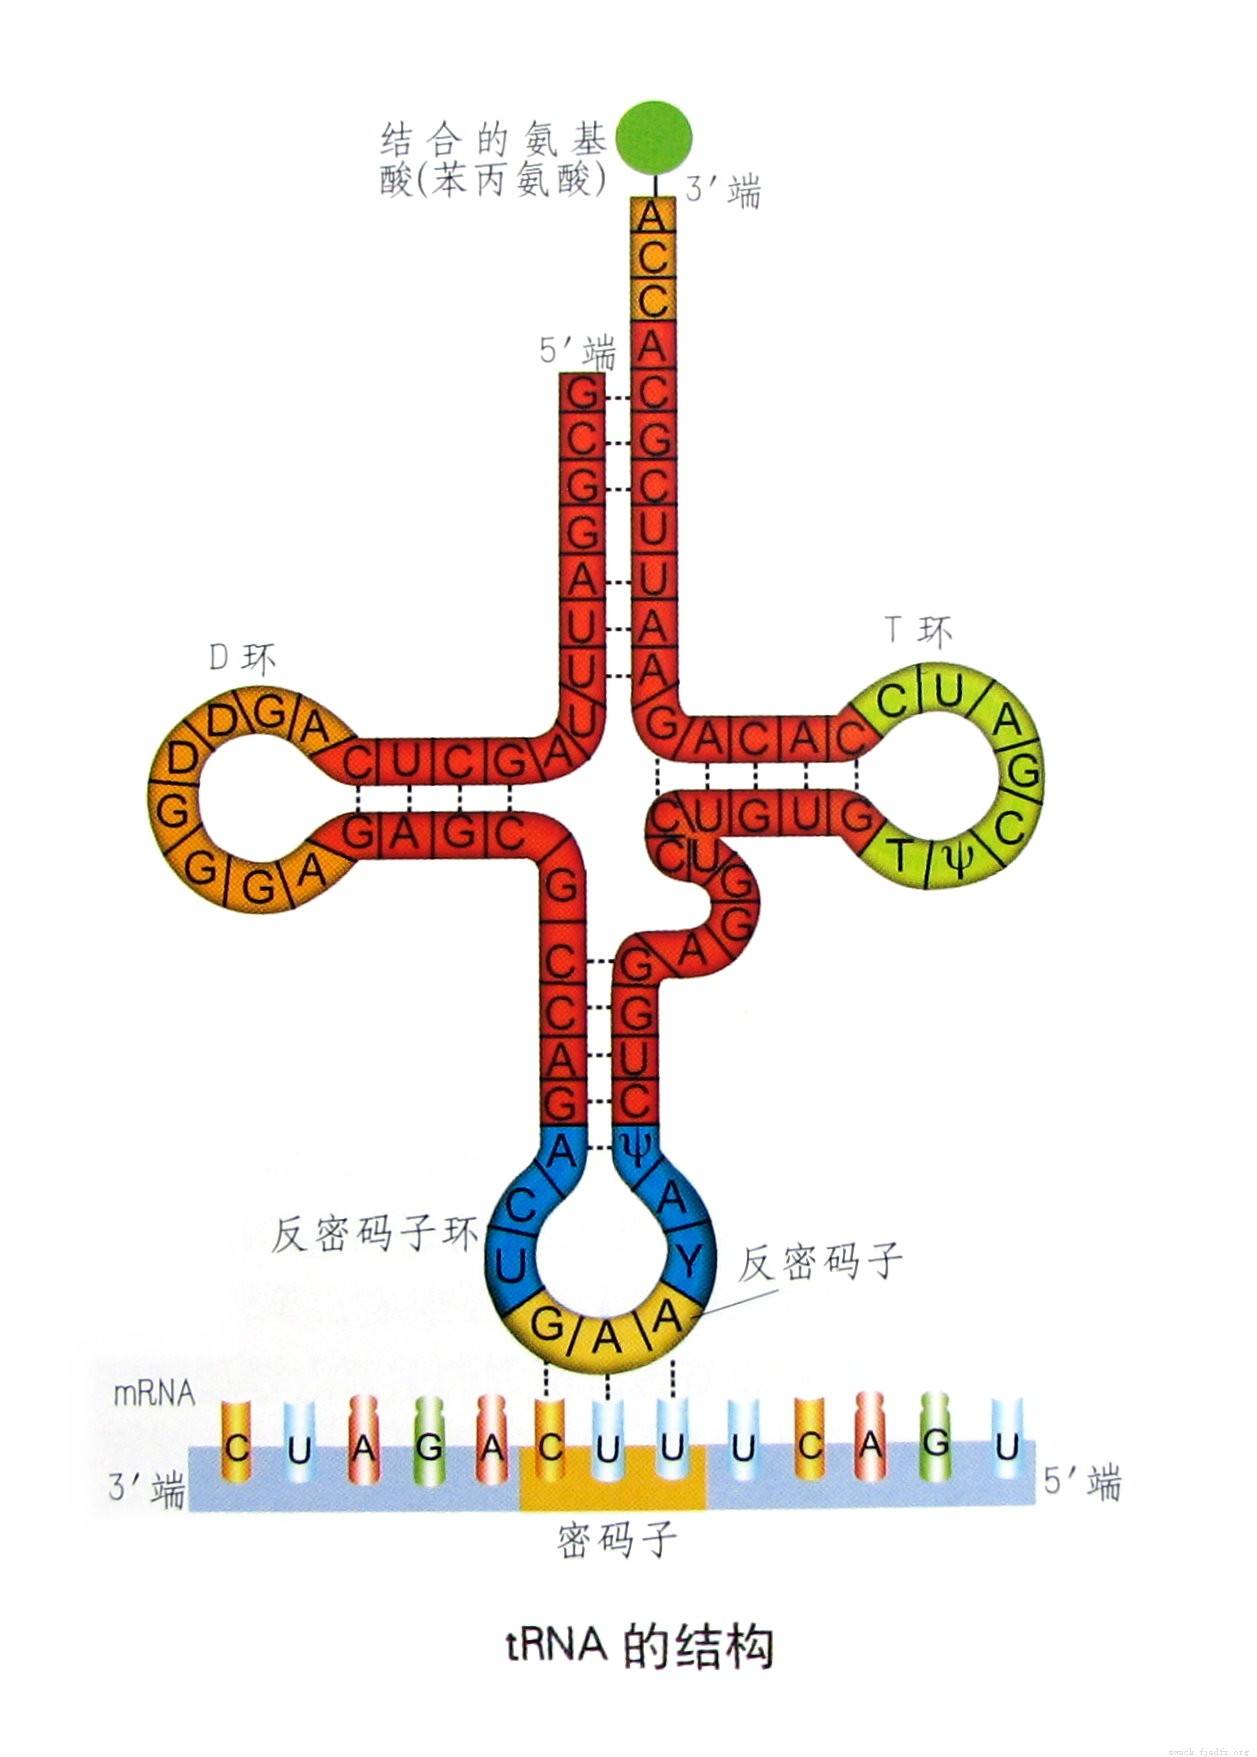 trna的一级结构就是核苷酸的排列顺序,通过折叠形成二级结构,三叶草状